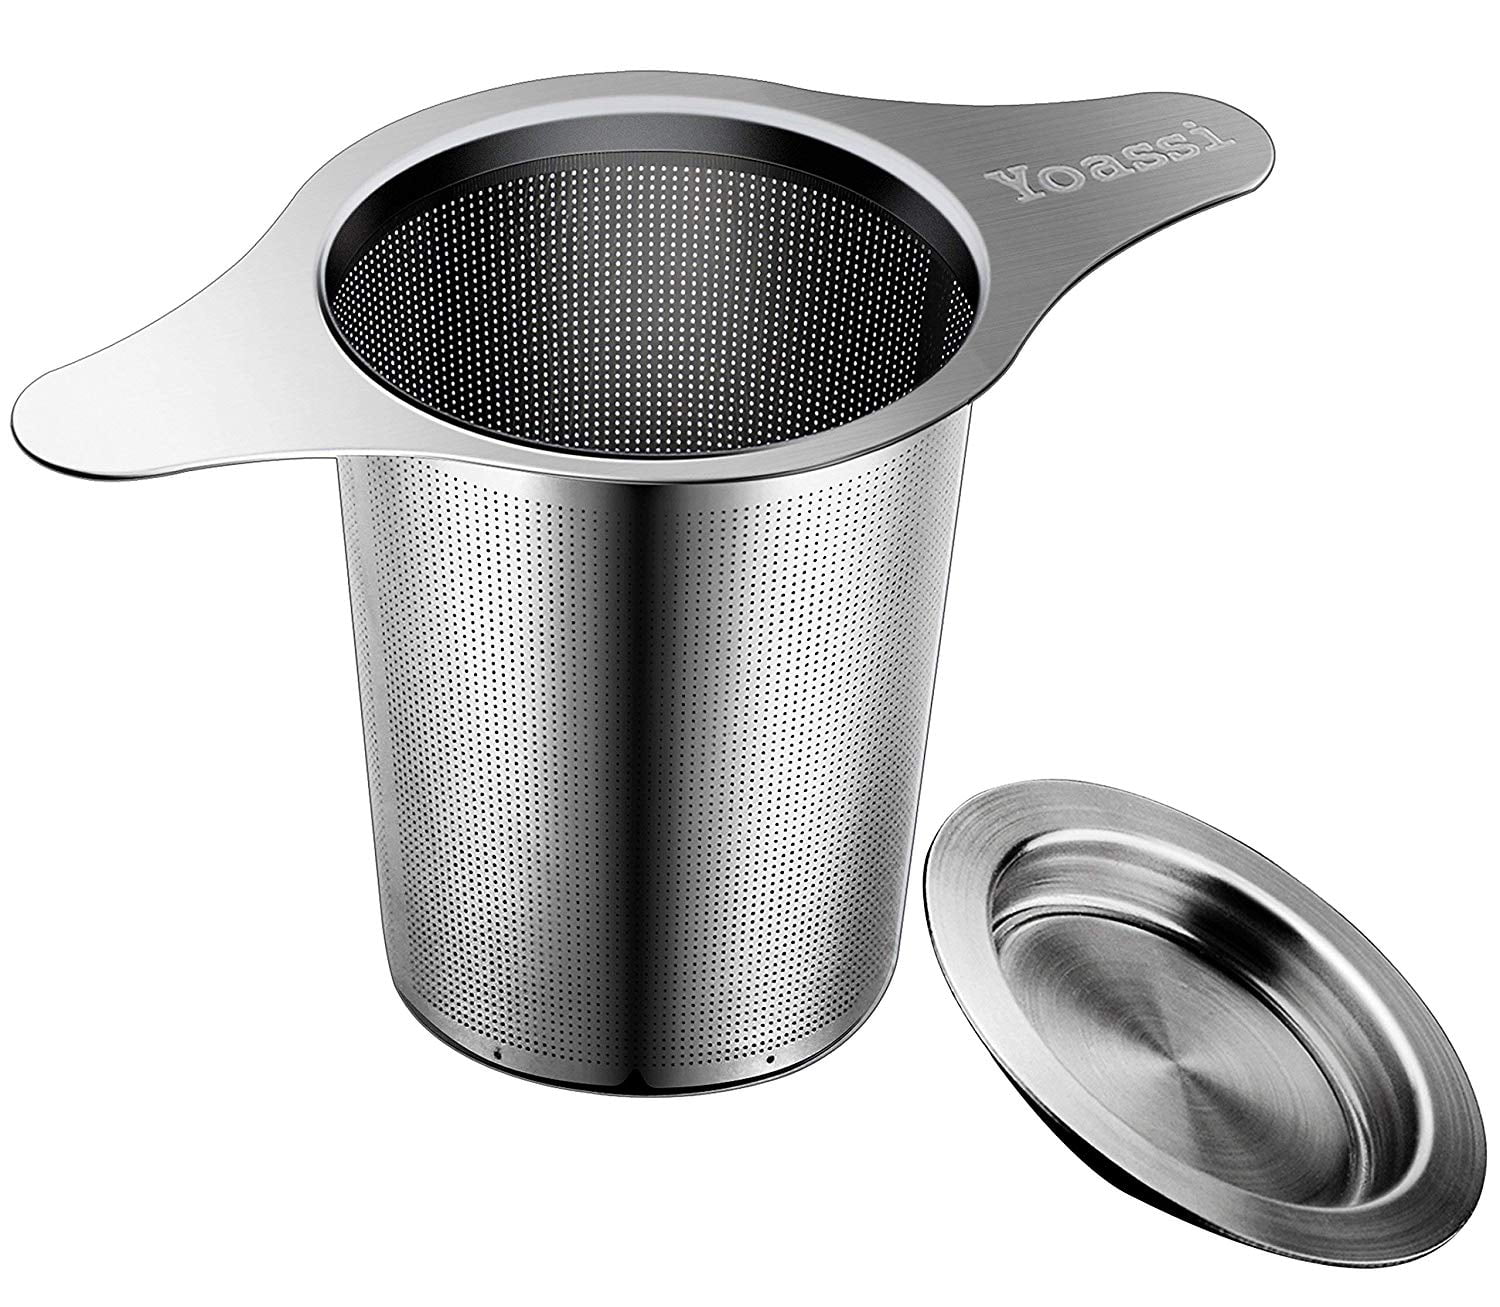 EUGU Stainless Steel Tea Infuser Filter Basket Fine Mesh Tea Strainer